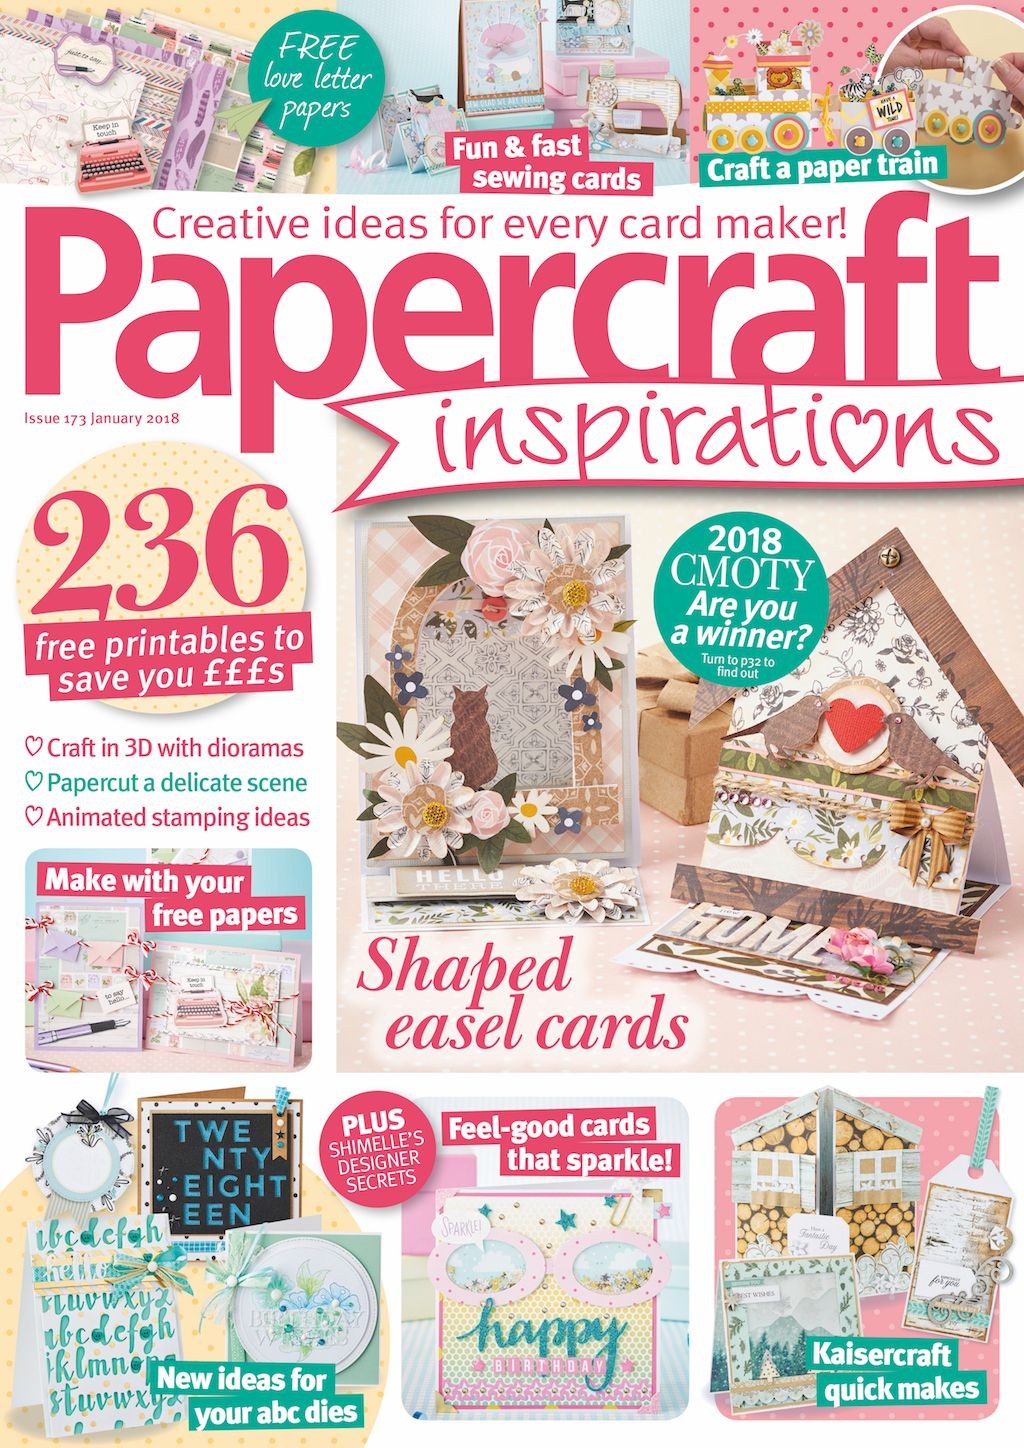 Papercraft Essentials Papercraft Inspirations Magazine issue 173